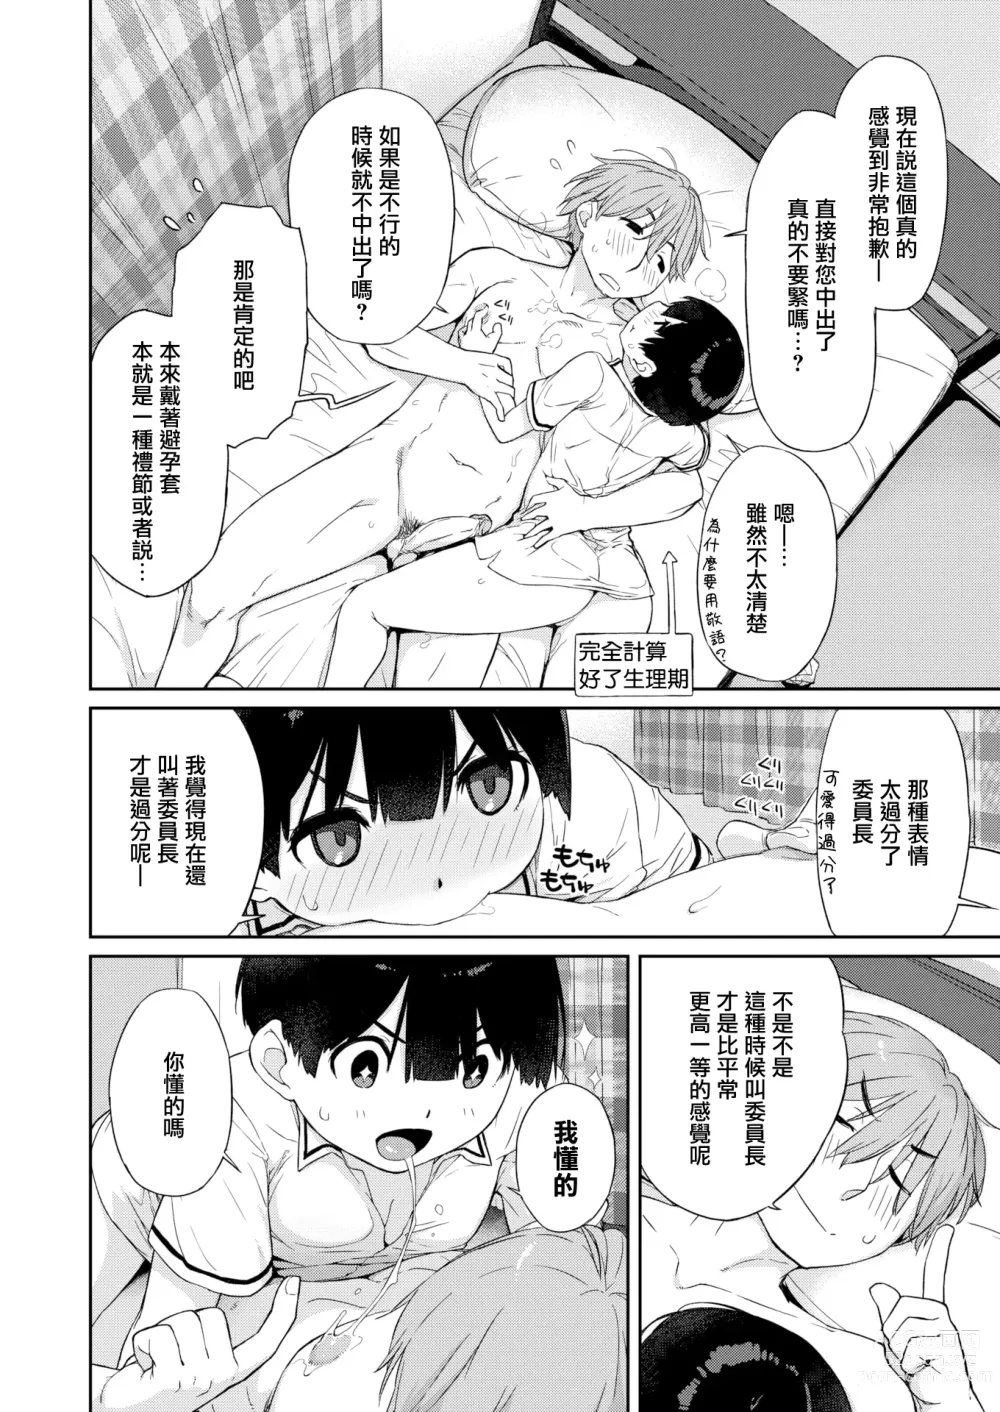 Page 3 of manga Kanente-san to Pillow Talk